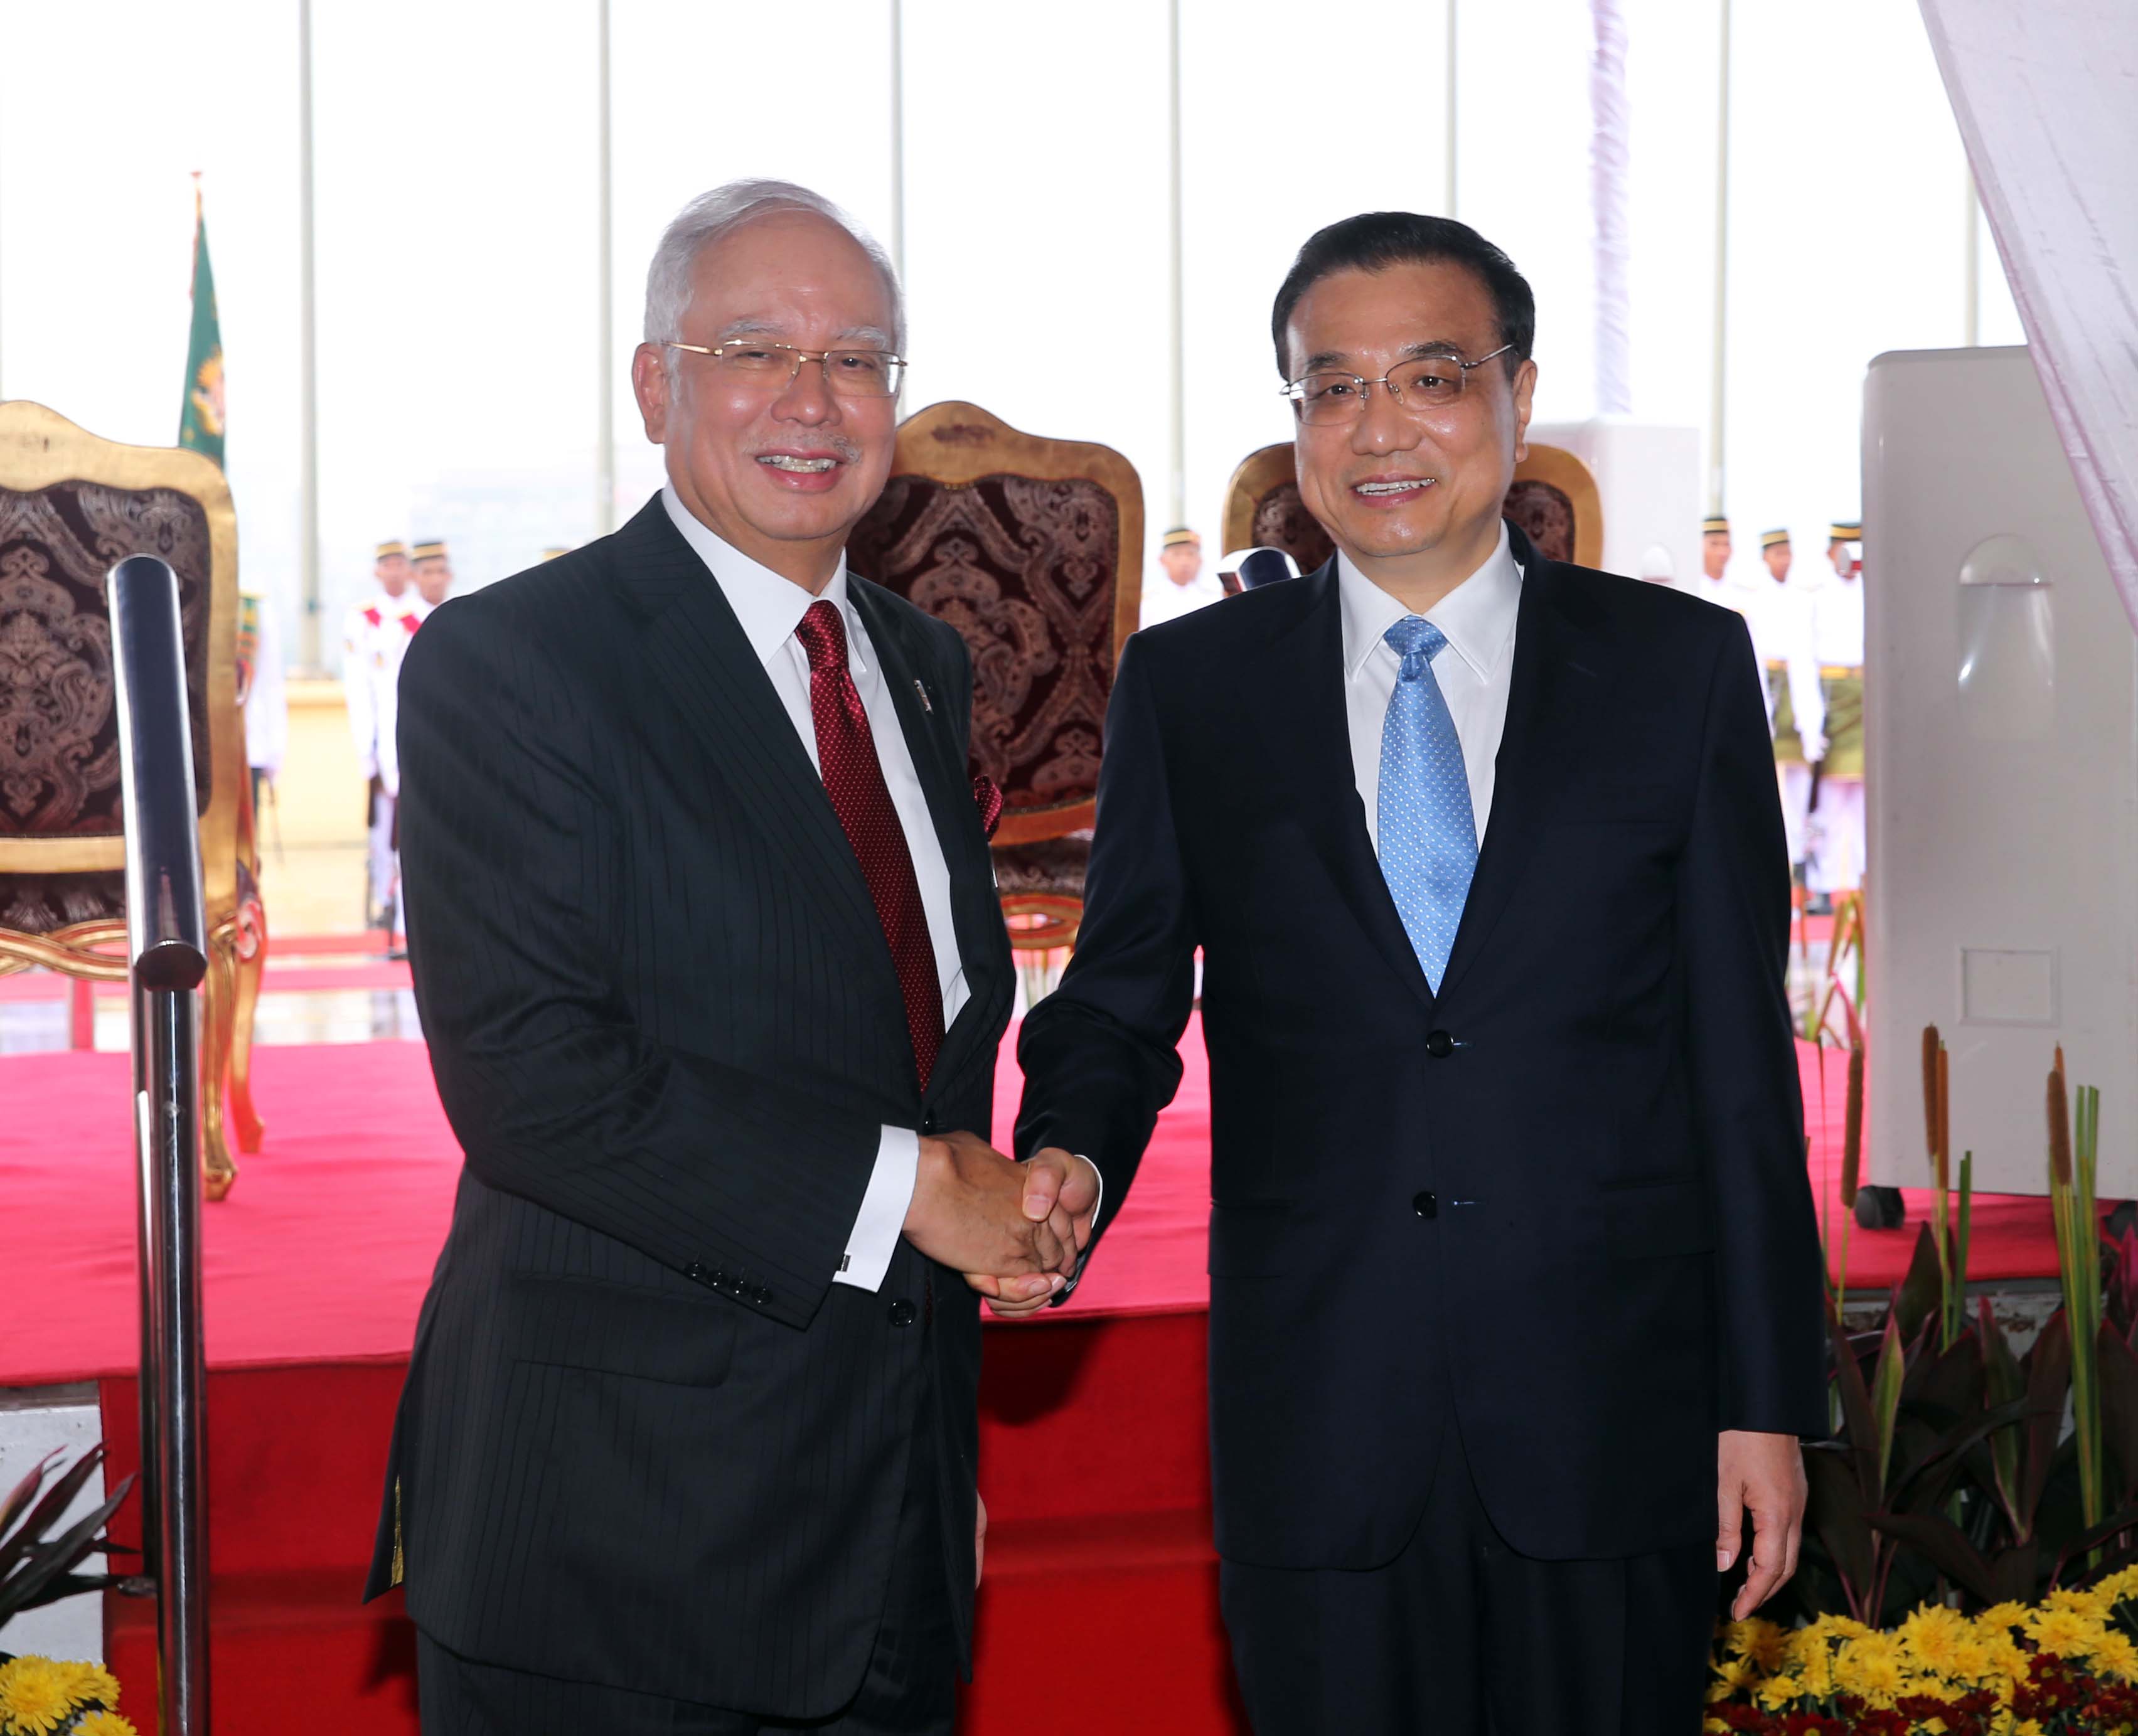 (151123) -- KUALA LUMPUR, Nov. 23, 2015 (Xinhua) -- Chinese Premier Li Keqiang (R) shakes hands with Malaysian Prime Minister Najib Razak during their talks in Kuala Lumpur, Malaysia, Nov. 23, 2015. (Xinhua/Liu Weibing) (dhf)